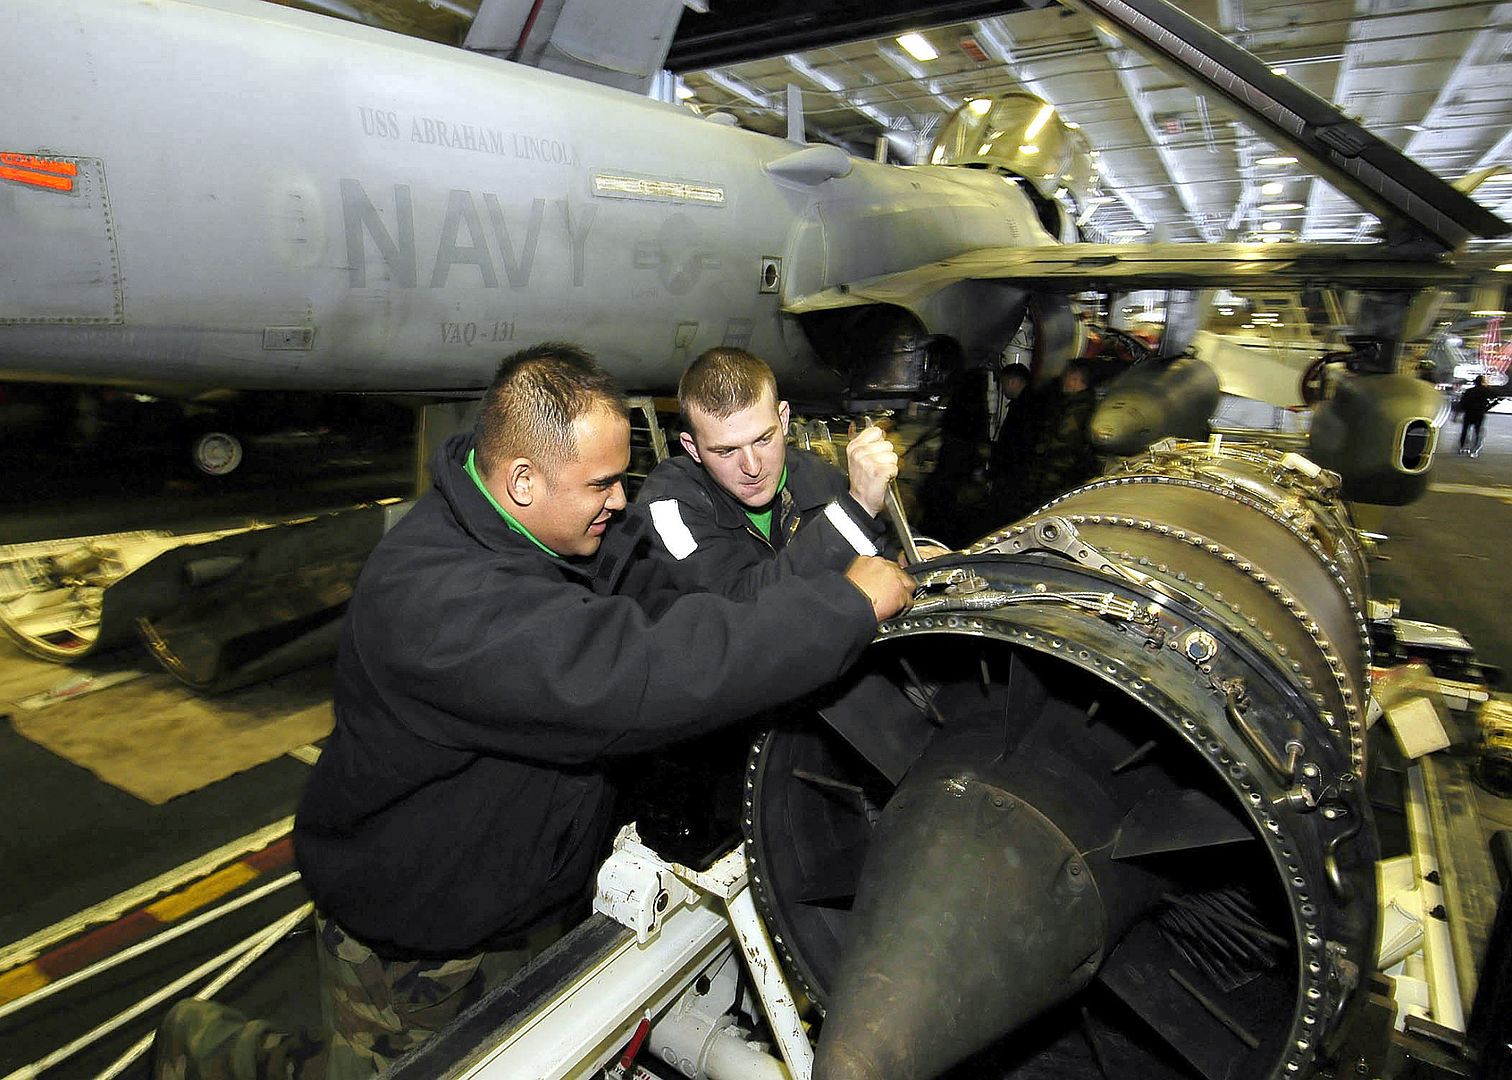 6B Prowler Aircraft Engine Inside The Hangar Bay Of The Nimitz Class Aircraft Carrier USS ABRAHAM LINCOLN